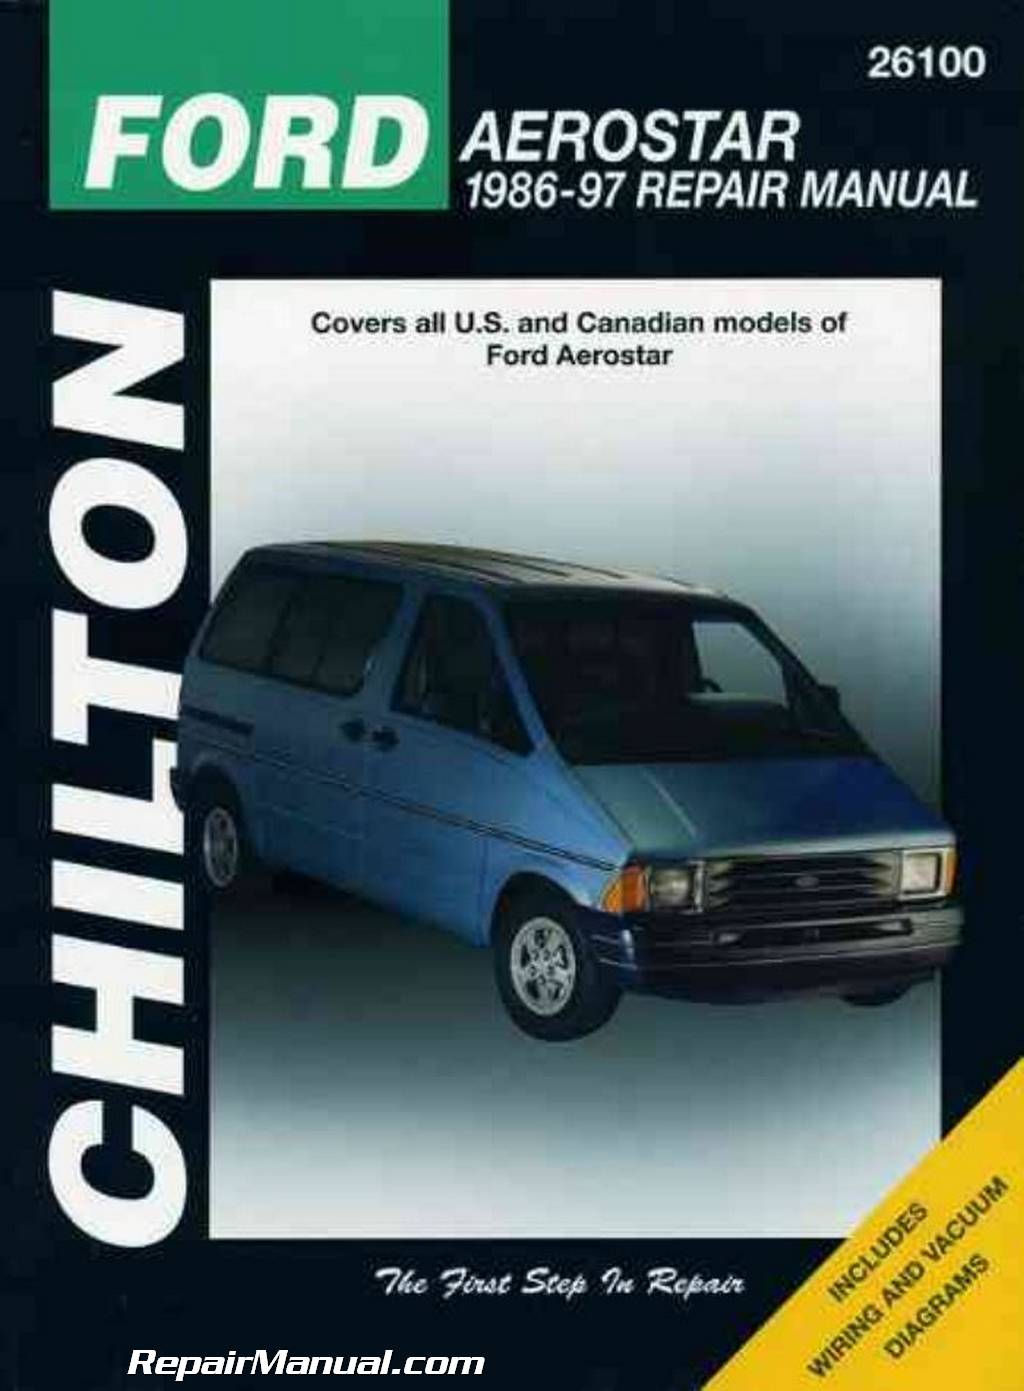 Chilton Ford Aerostar 1986-1997 Repair Manual